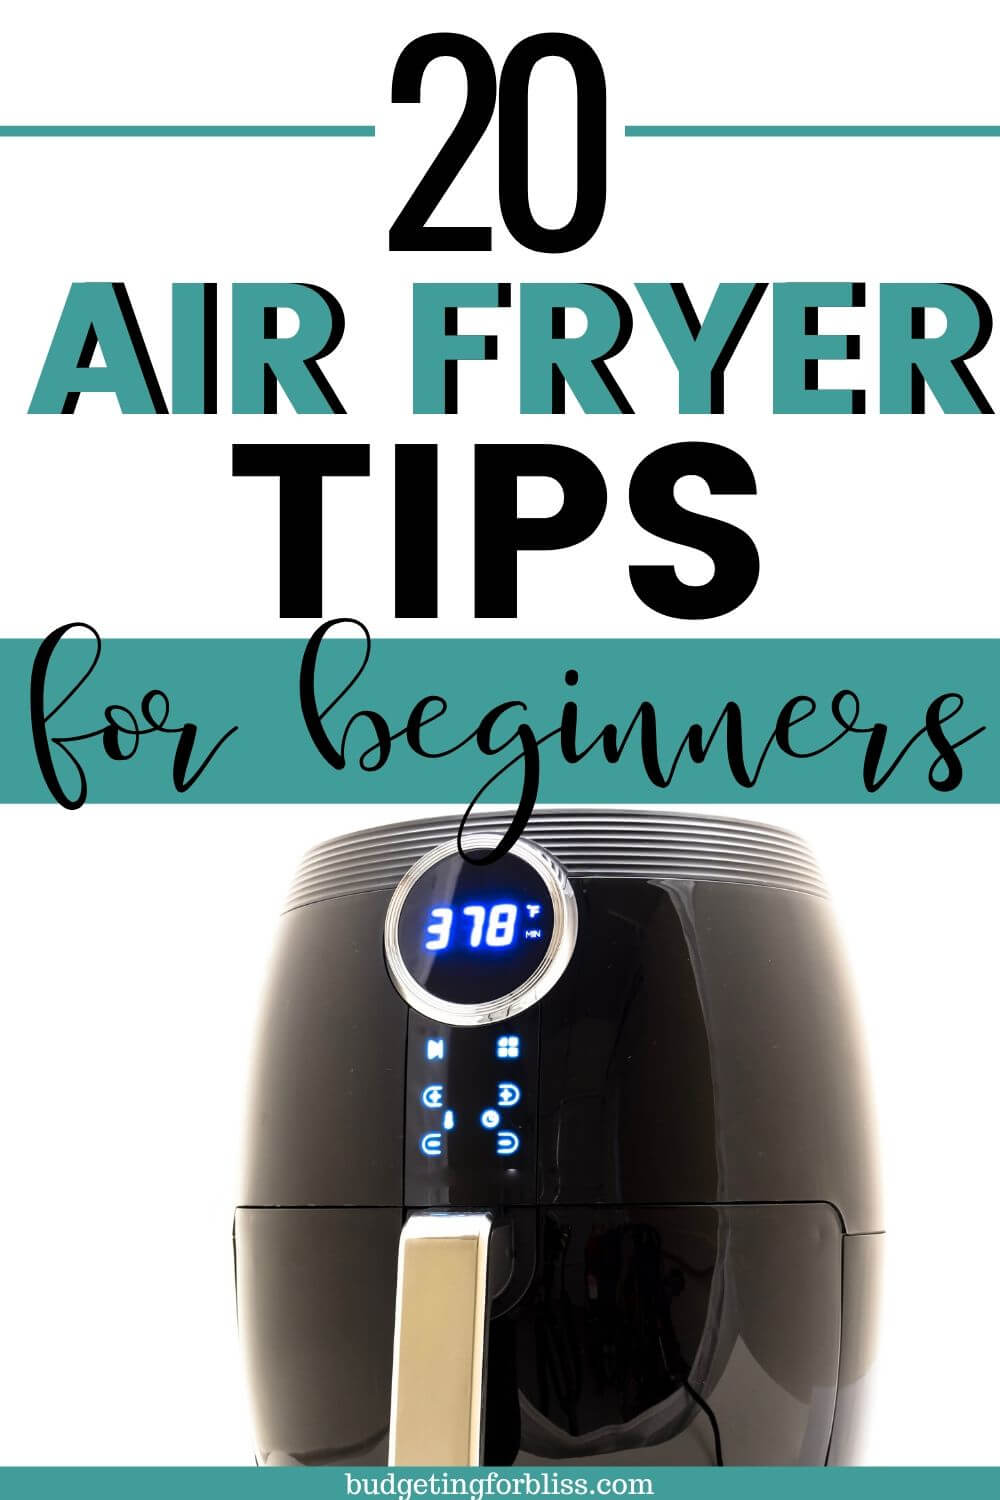 https://budgetingforbliss.com/wp-content/uploads/2020/04/20-Air-fryer-tips-for-beginners.jpg